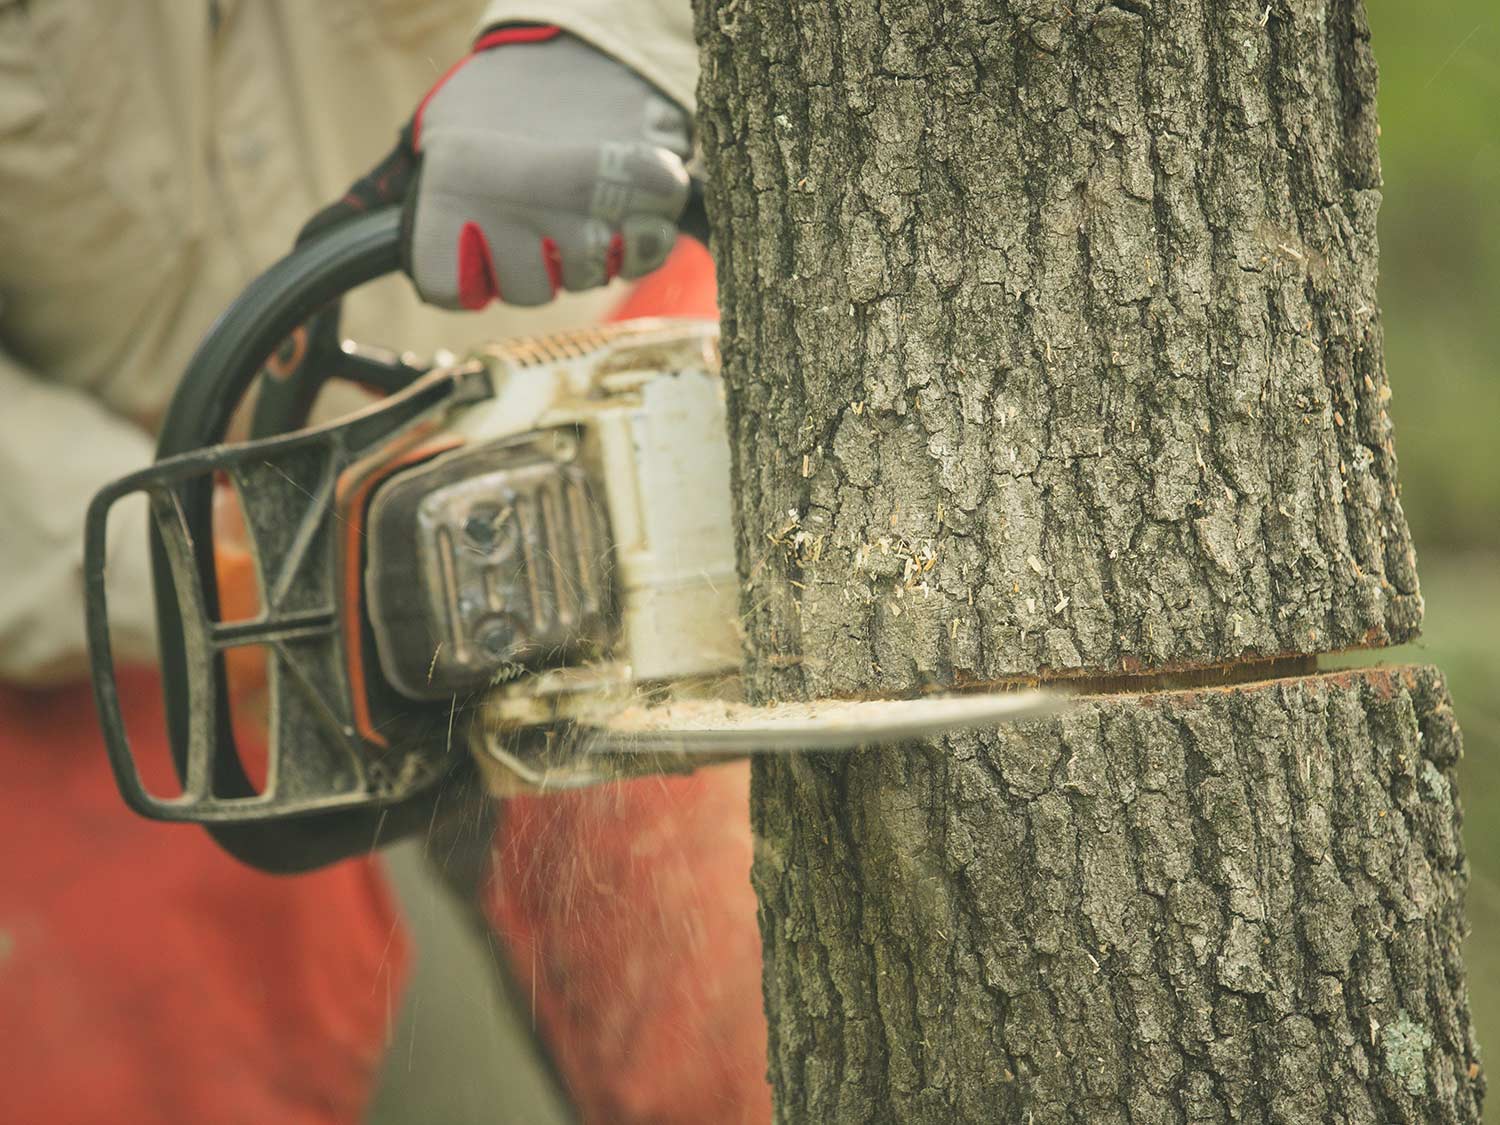 a chainsaw hinge-cutting a tree